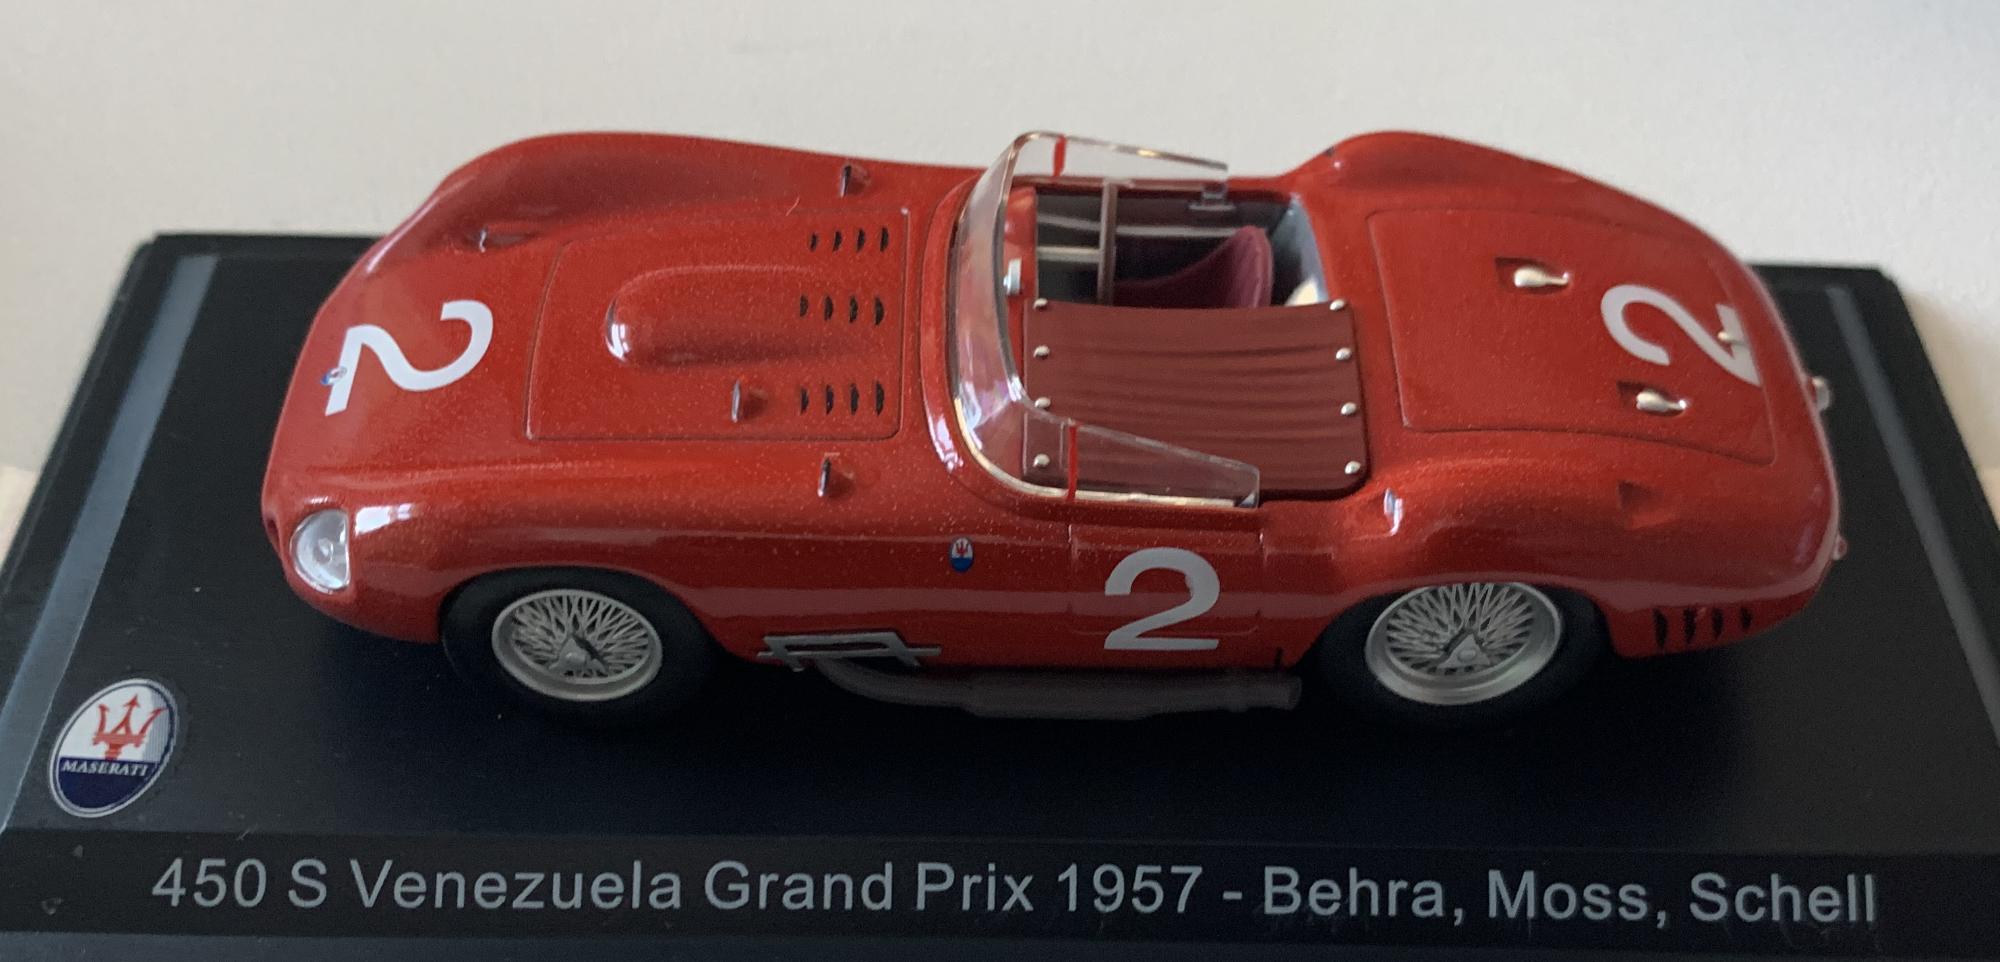 Maserati 450 S Venezuela Grand Prix 1957 #2 - Behra, Moss & Schell 1:43 scale